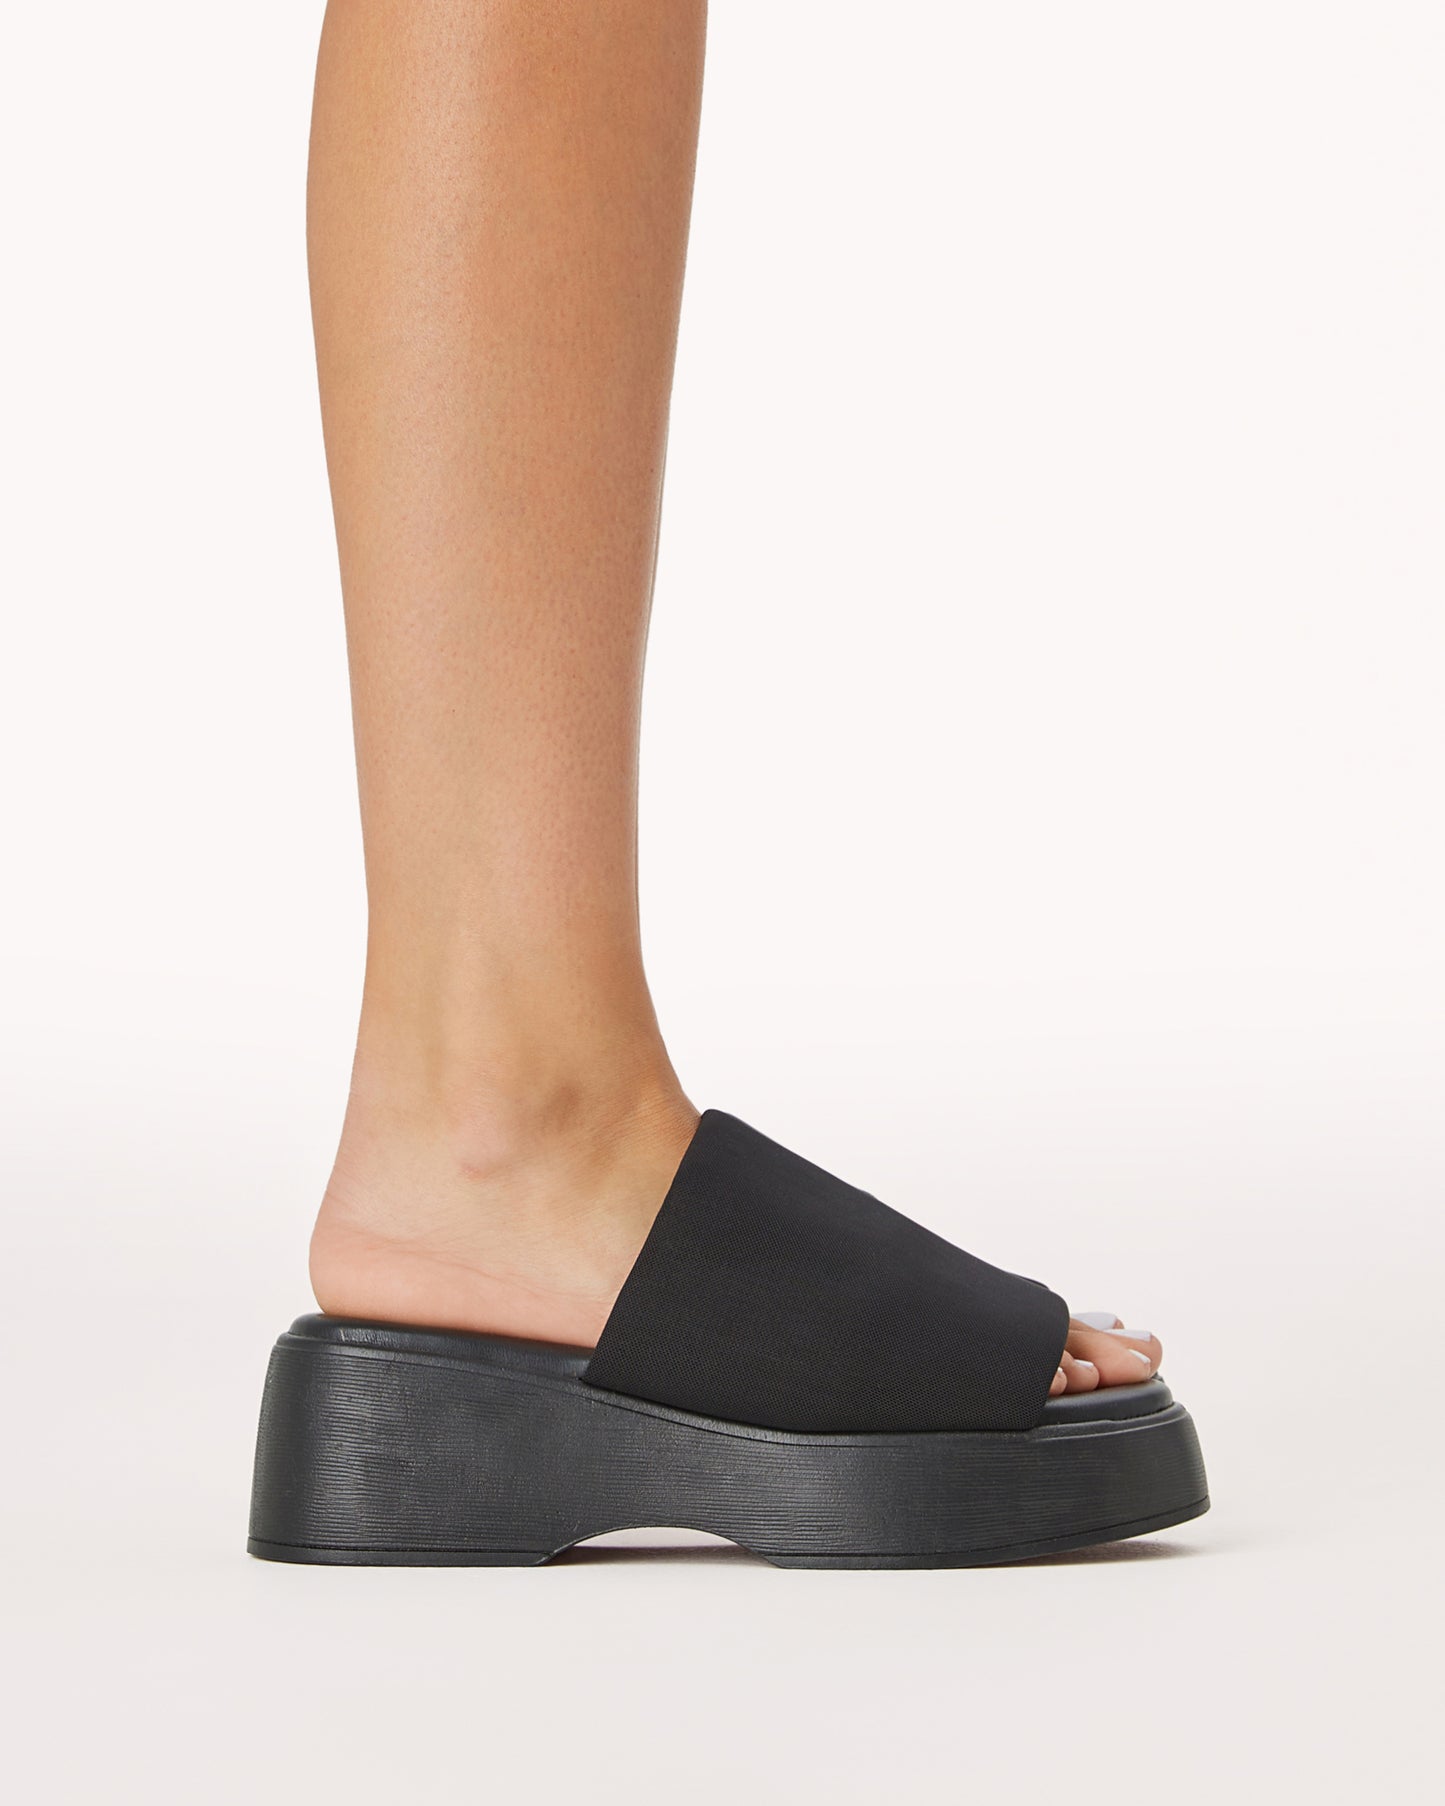 Women's Black Platform Sandal